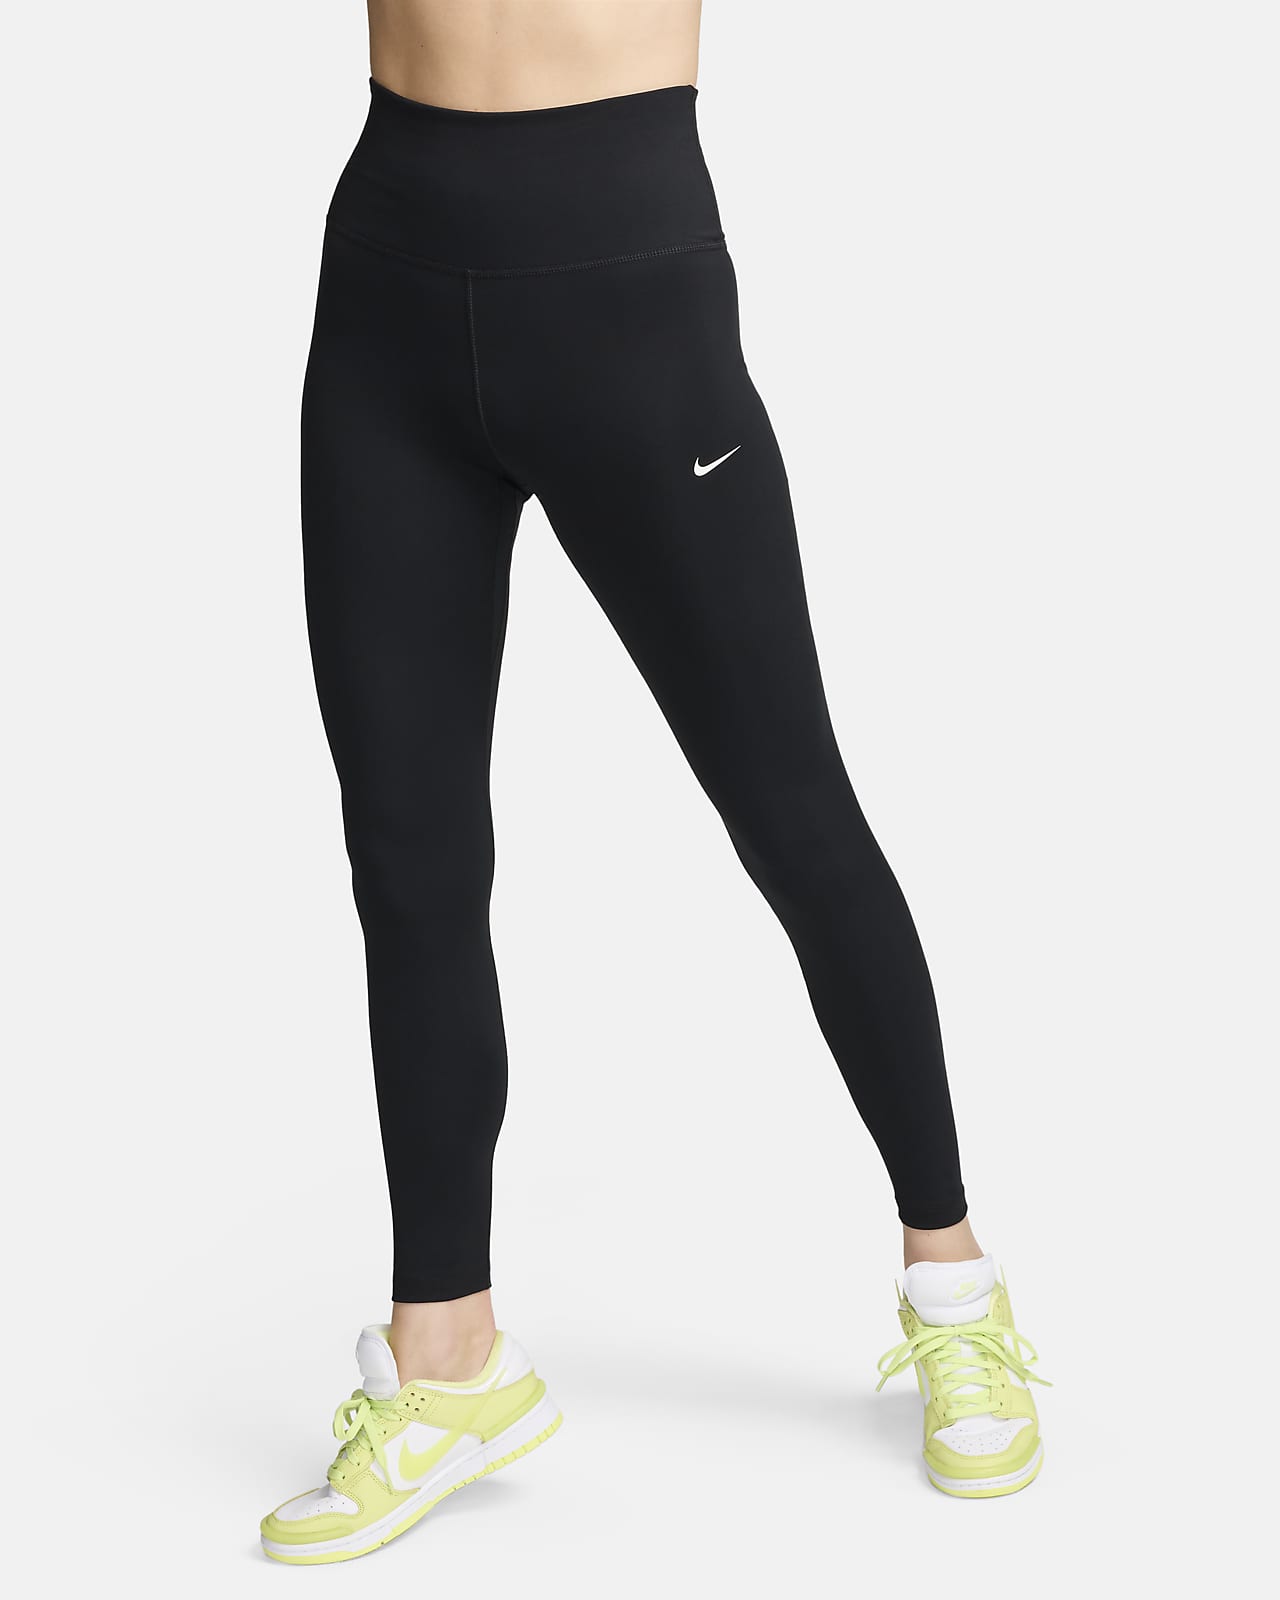 Nike One Leggings de talle alto y longitud completa - Mujer